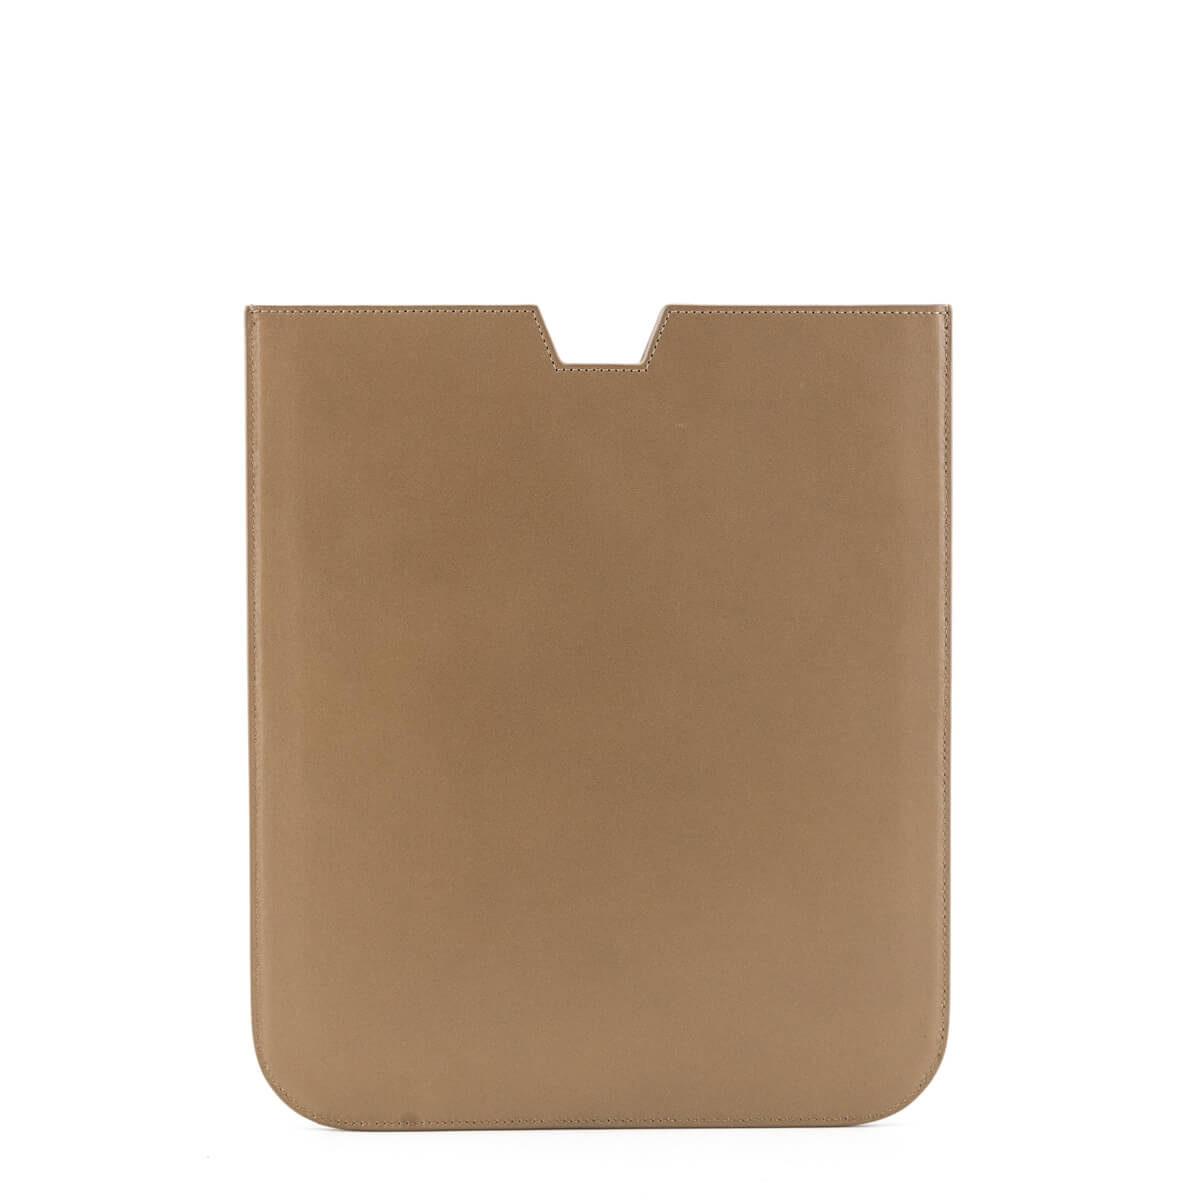 Saint Laurent Beige Smooth Calfskin iPad Case - Love that Bag etc - Preowned Authentic Designer Handbags & Preloved Fashions